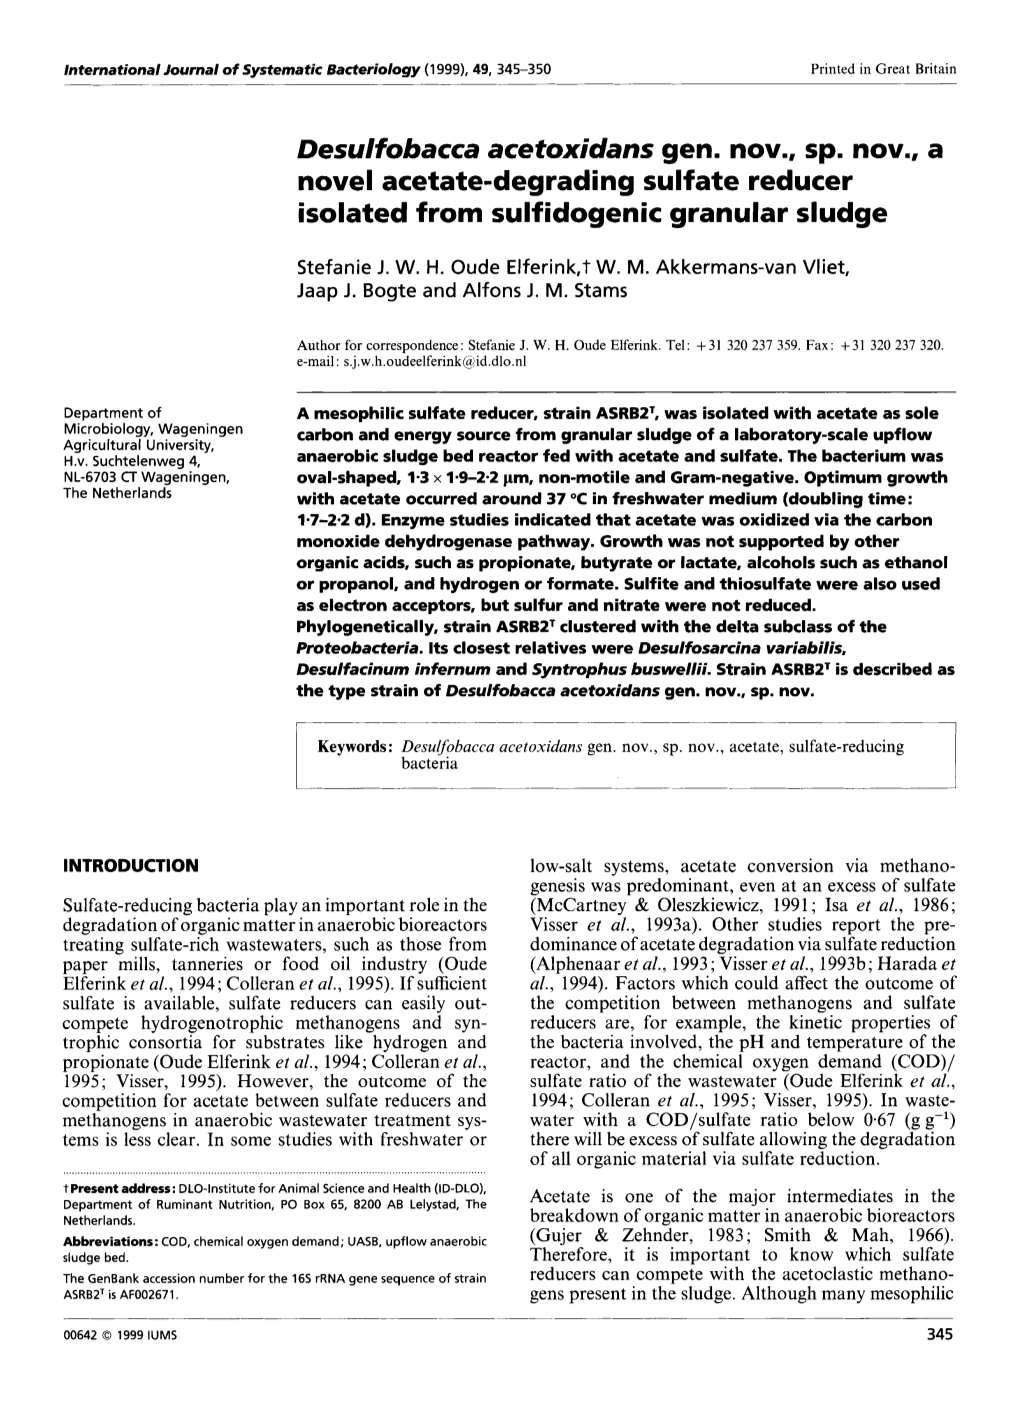 Desulfobacca Acetoxidans Gen. Nov., Sp. Nov., a Novel Acetate-Degrading Sulfate Reducer Isolated from Sulf Idogenic Granular Sludge